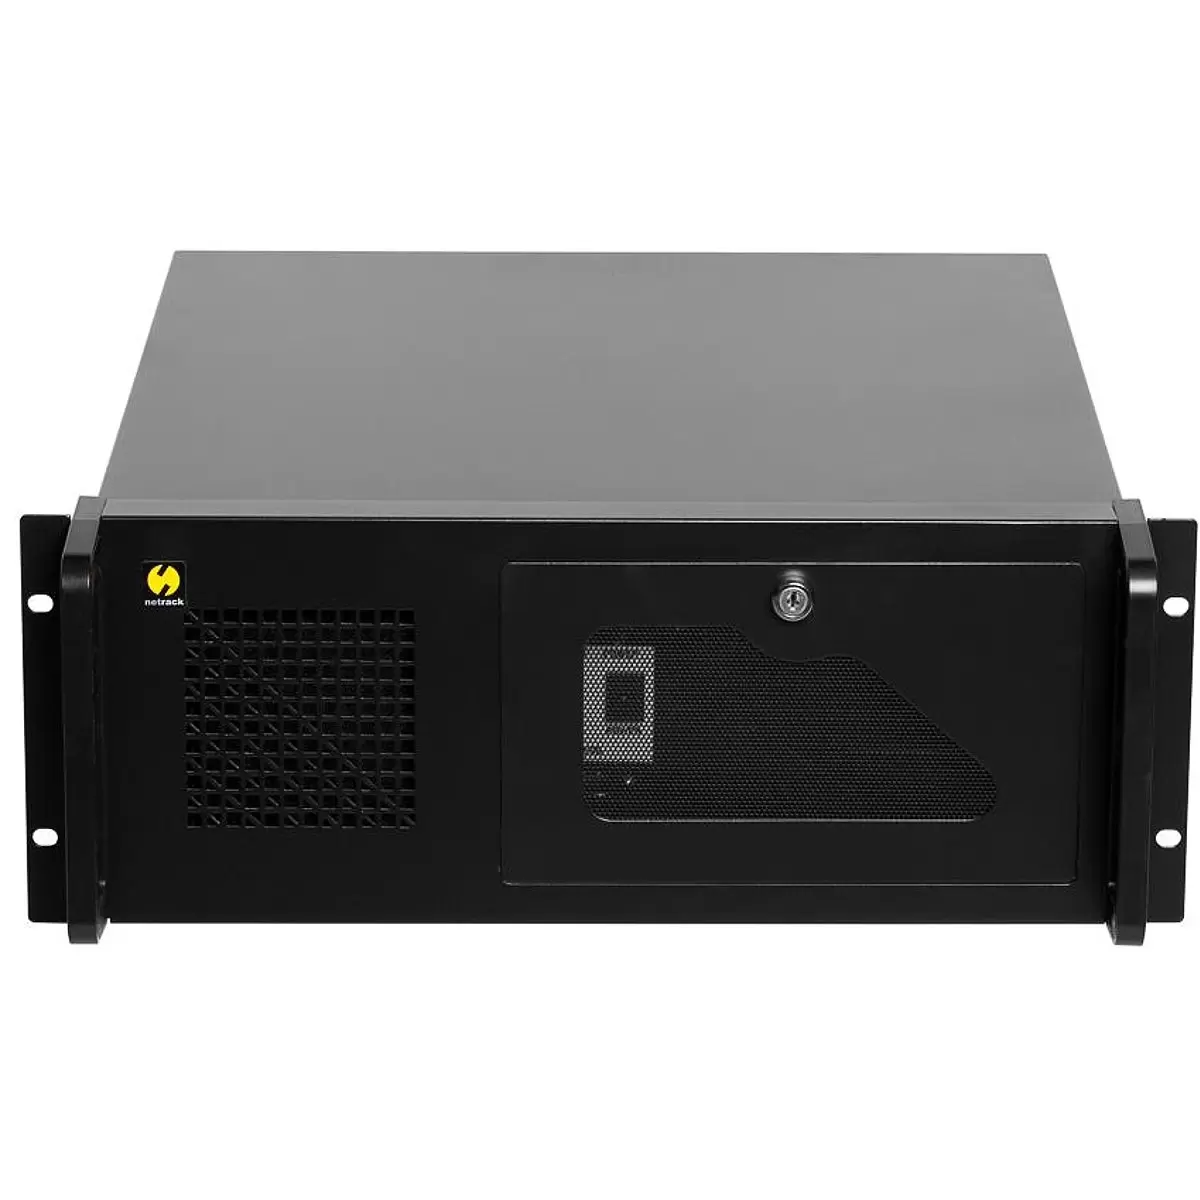 NETRACK NP5105 server case microATX